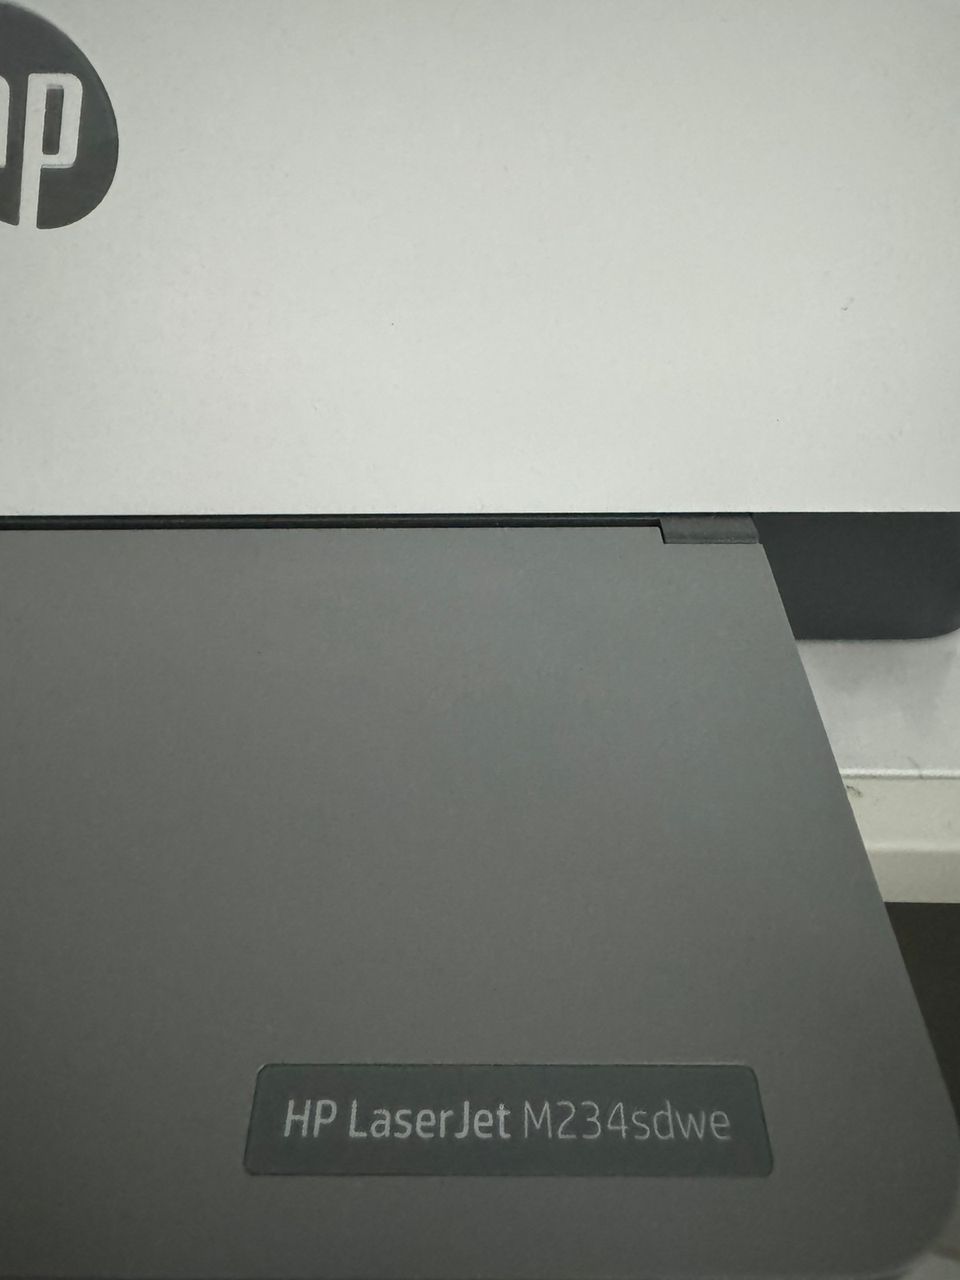 HP Laserjet m234sdwe tulostin